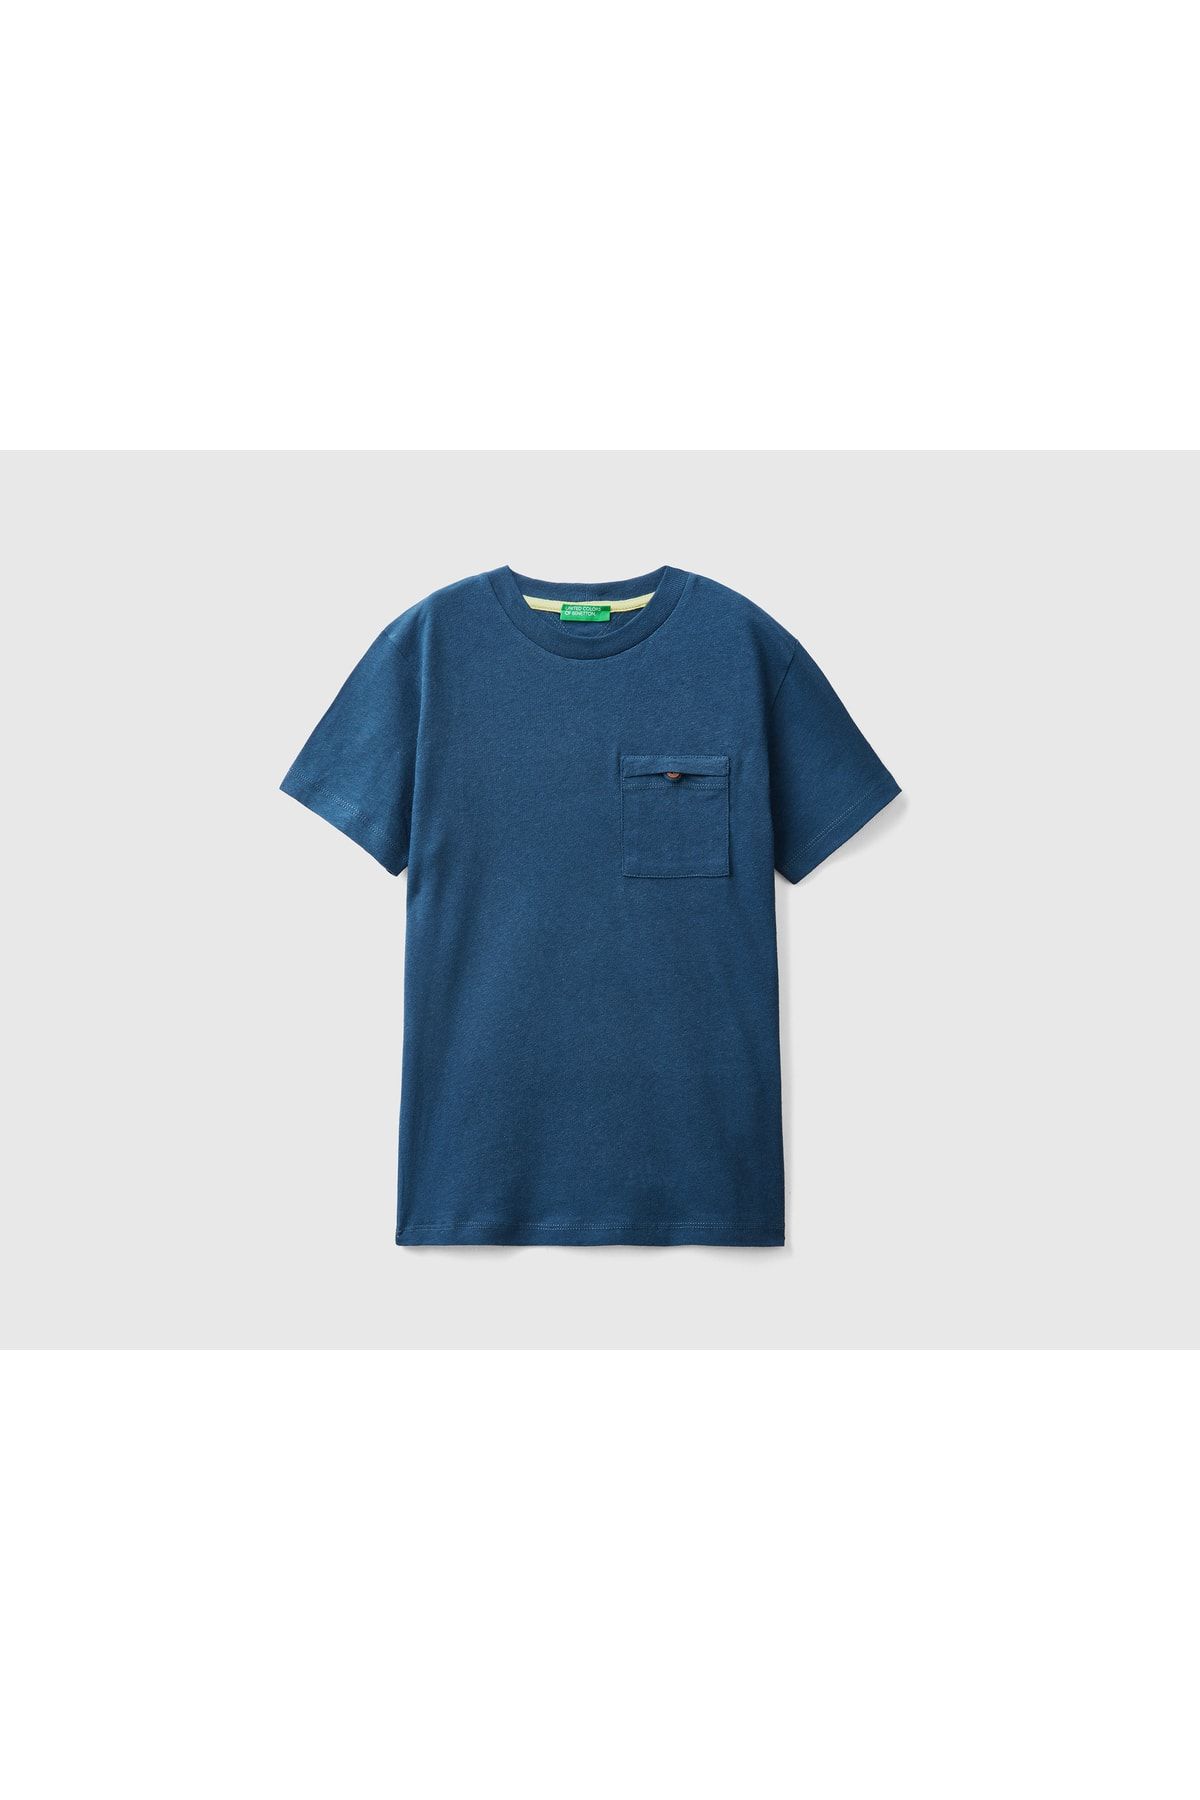 United Colors of Benetton Erkek Çocuk Lacivert Cebi Düğmeli T-shirt Lacivert